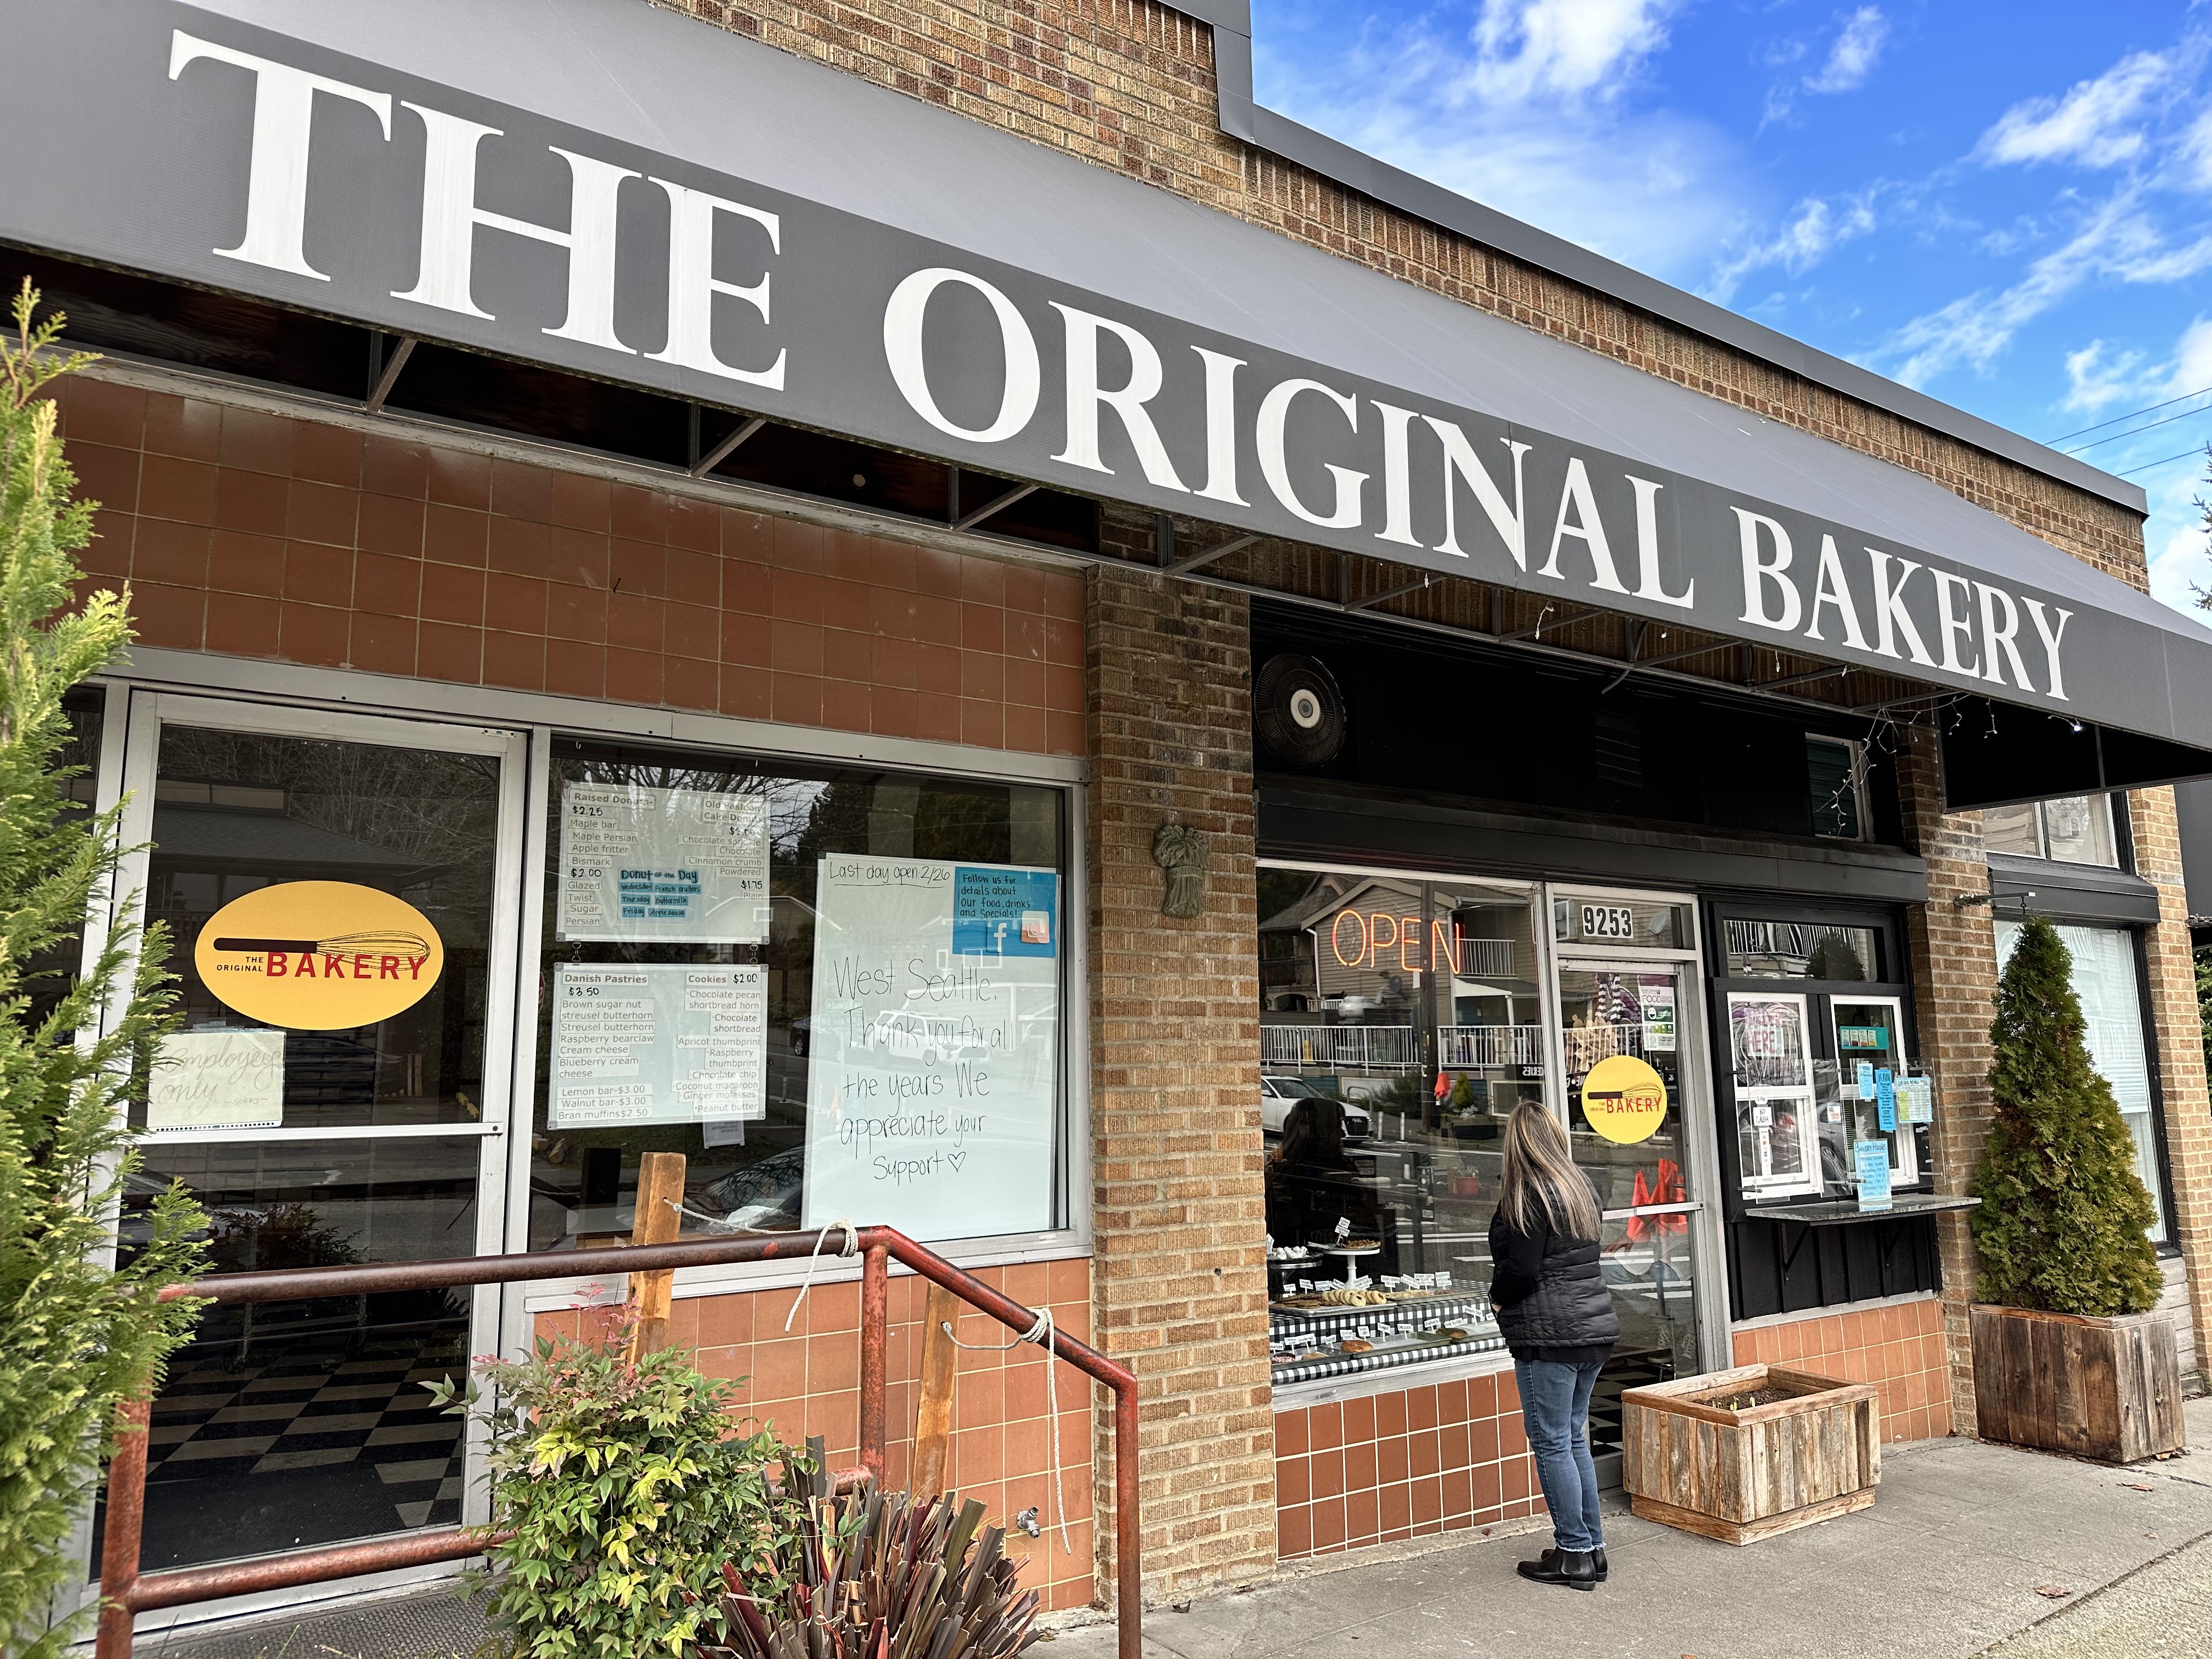 The original bakery